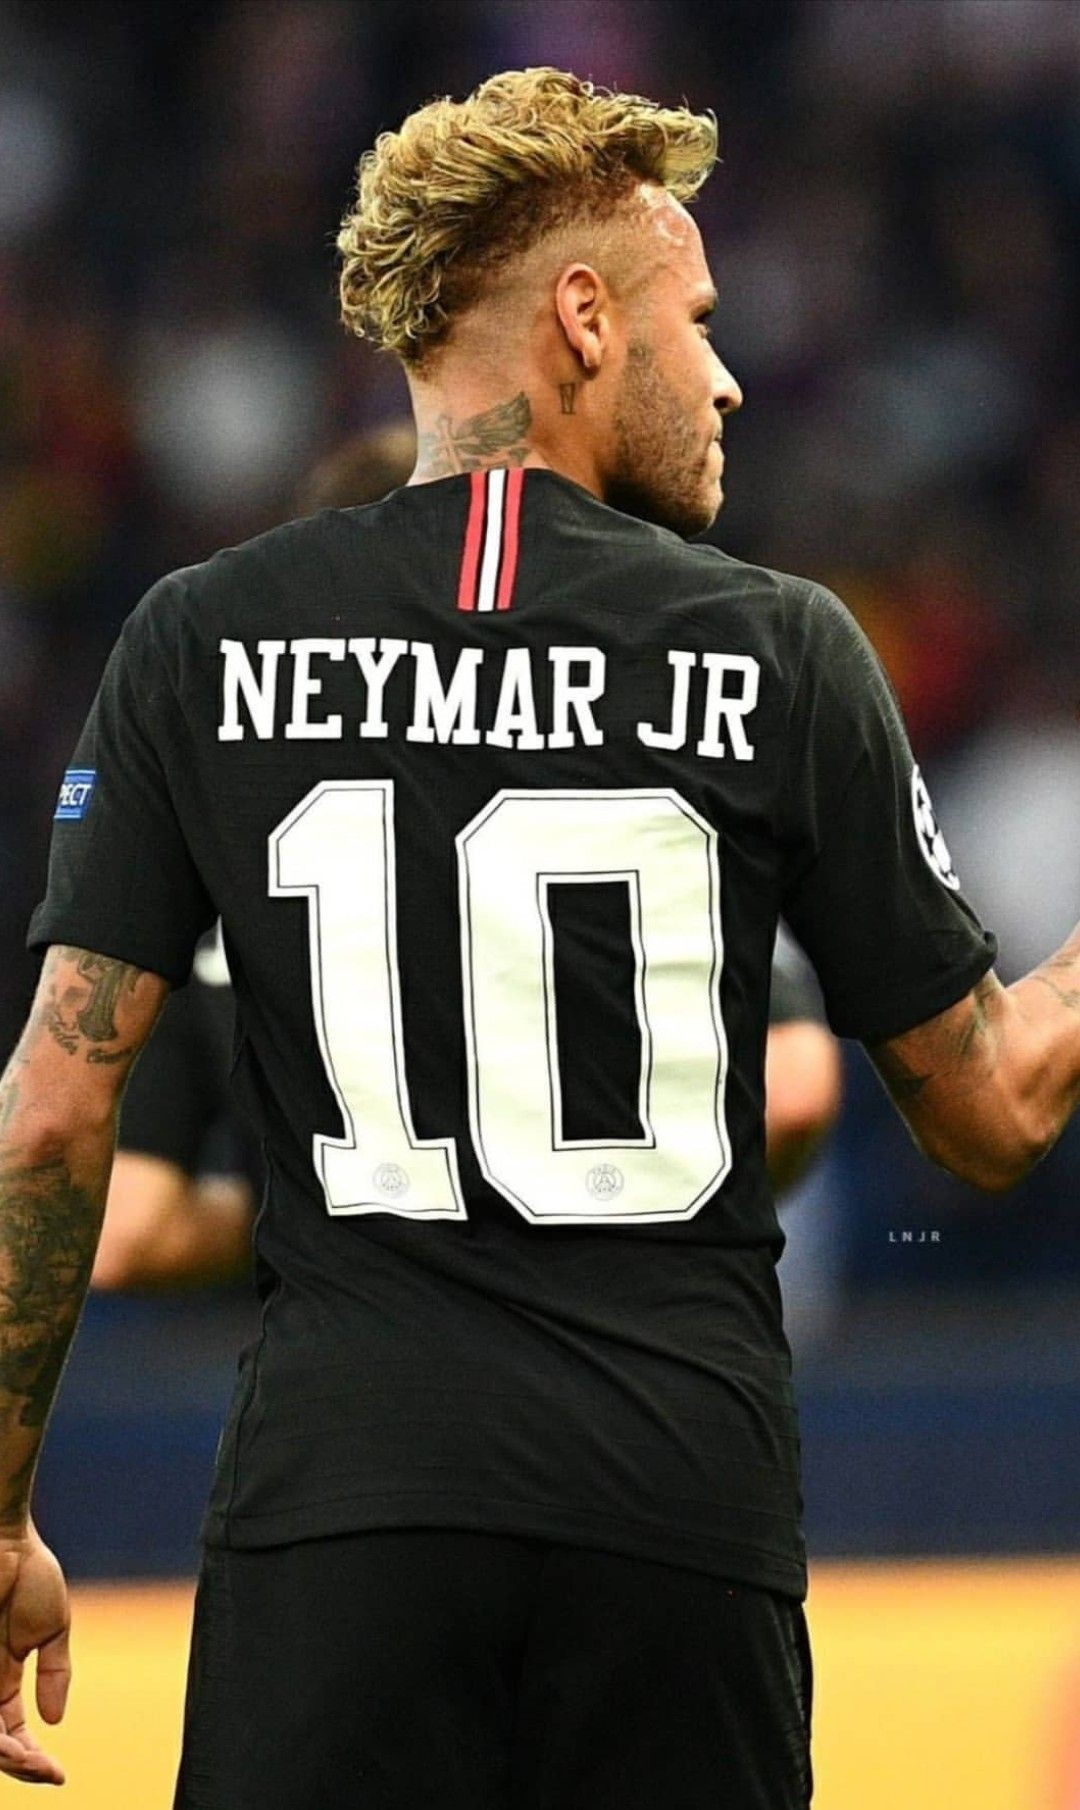 Neymar Jr Hairstyle 2019 2244979 Hd Wallpaper Backgrounds Download